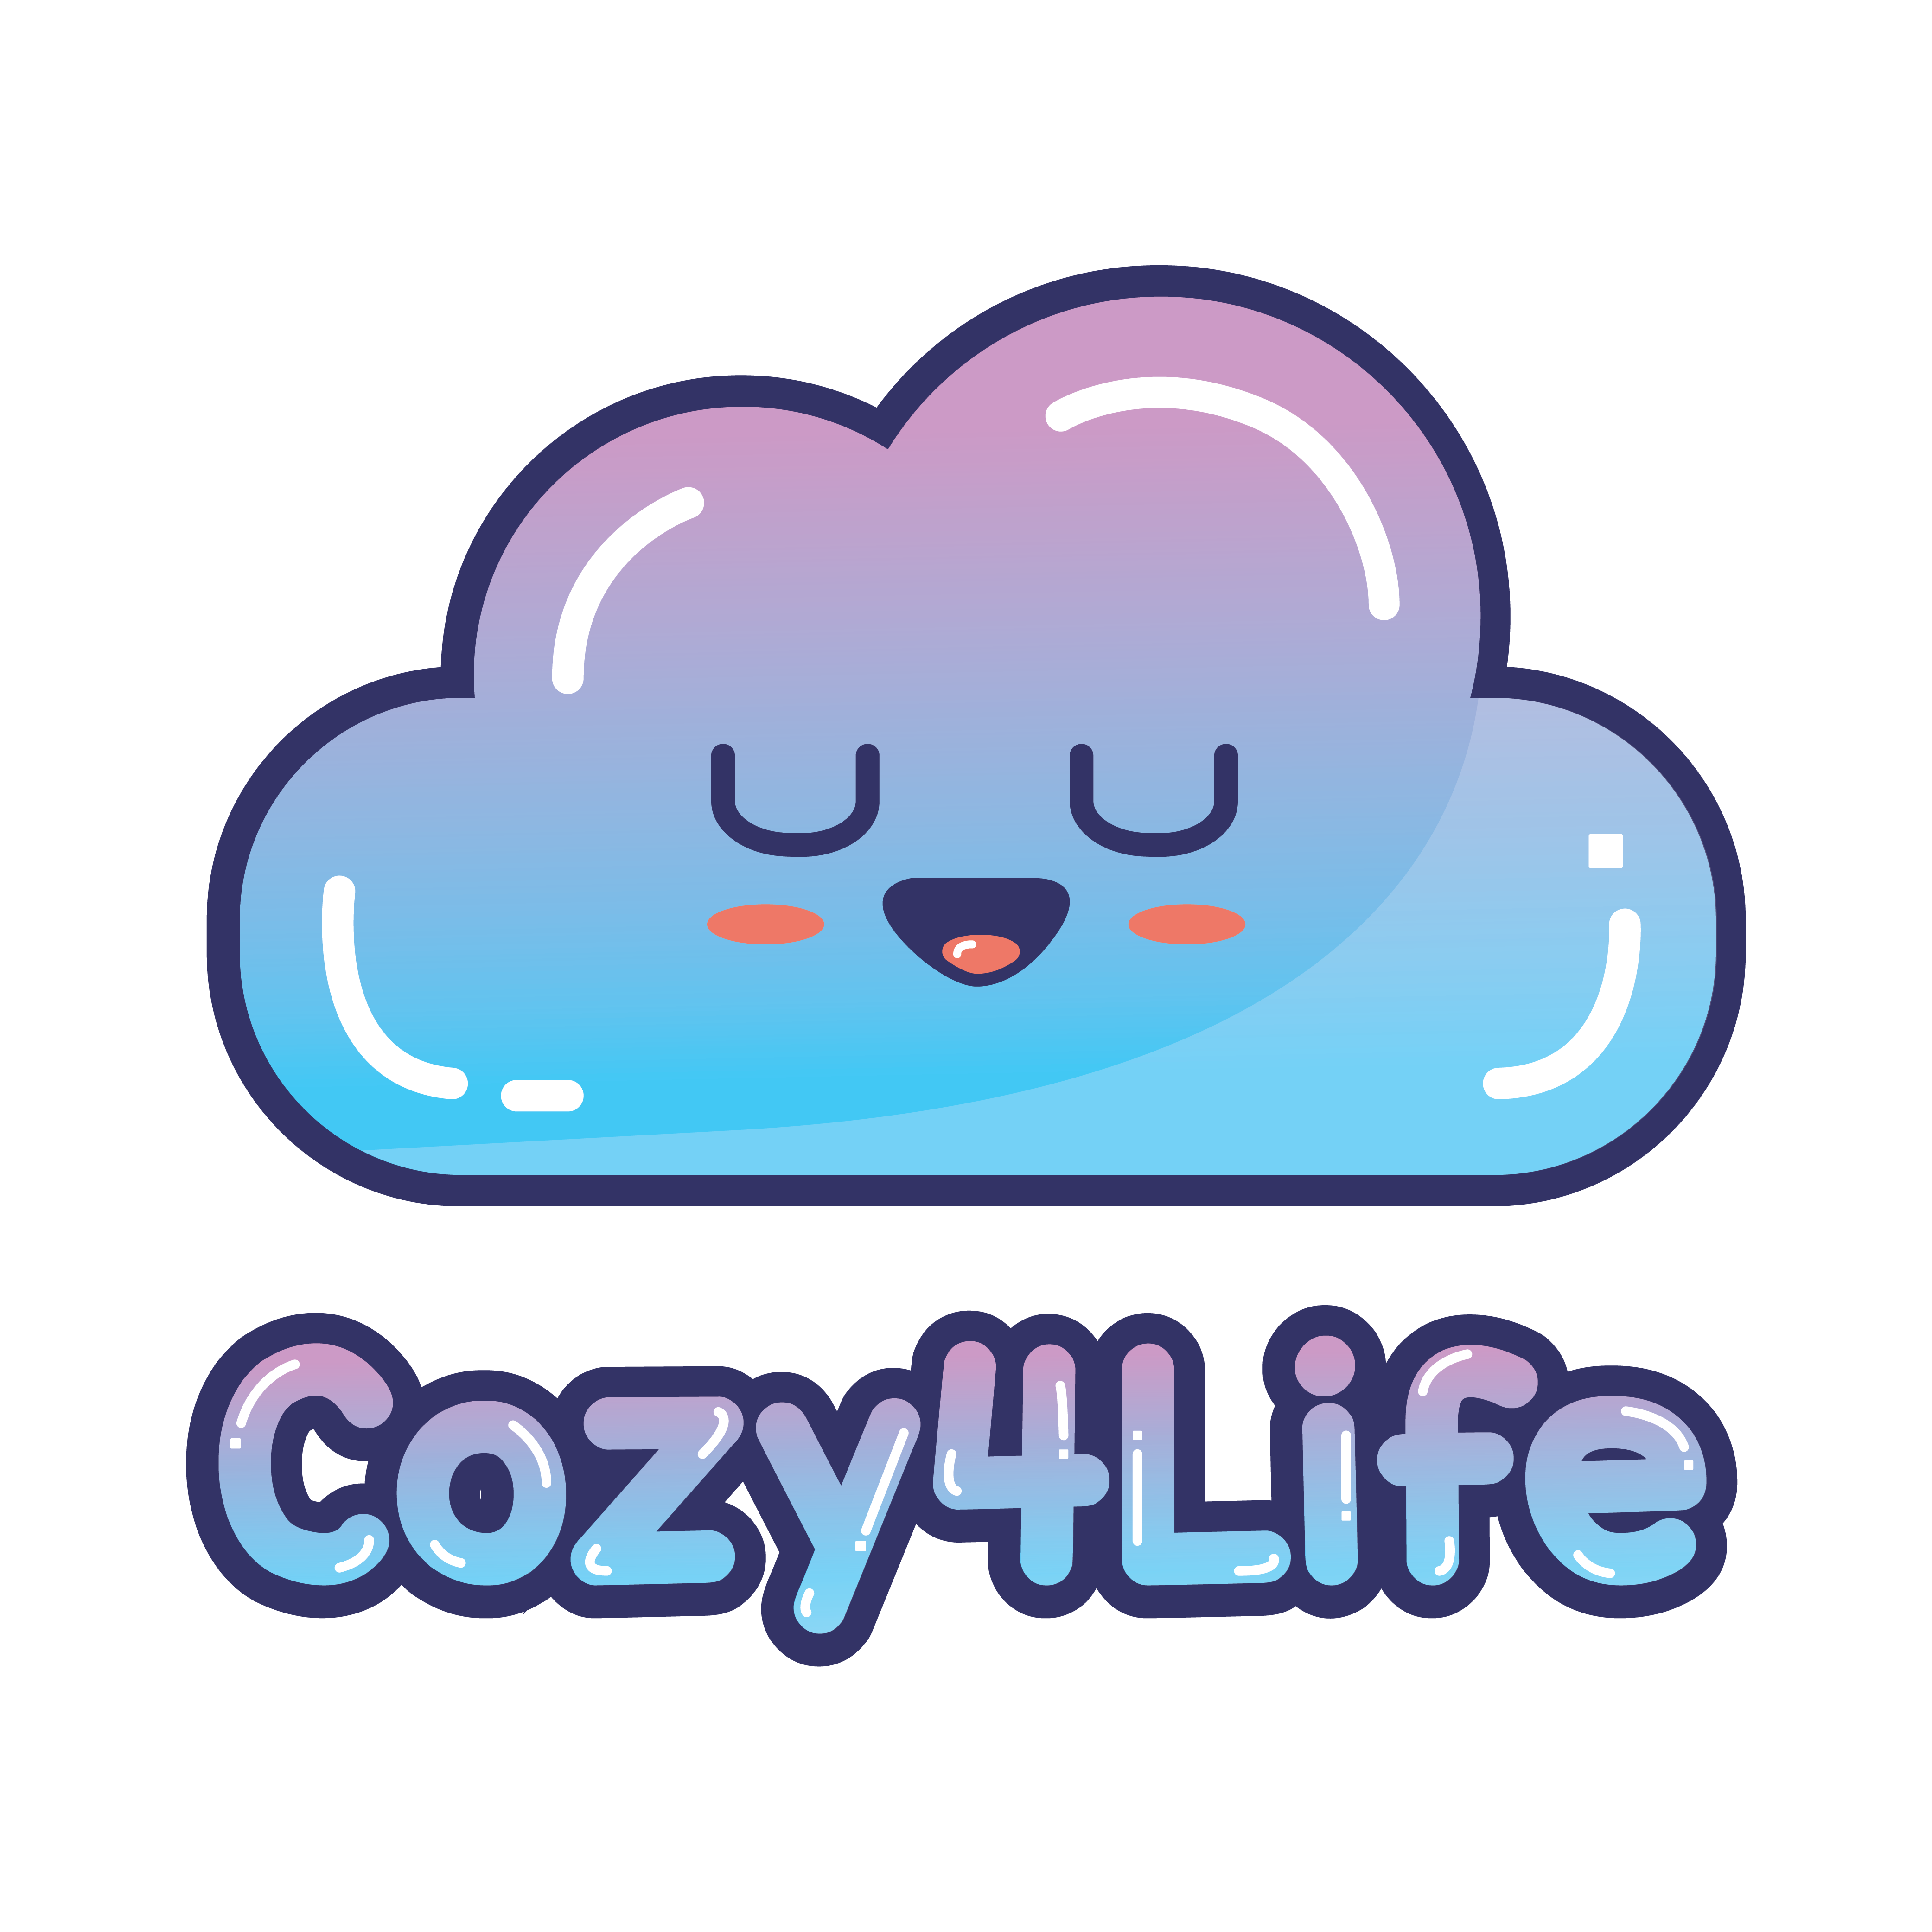 officialcozy4life